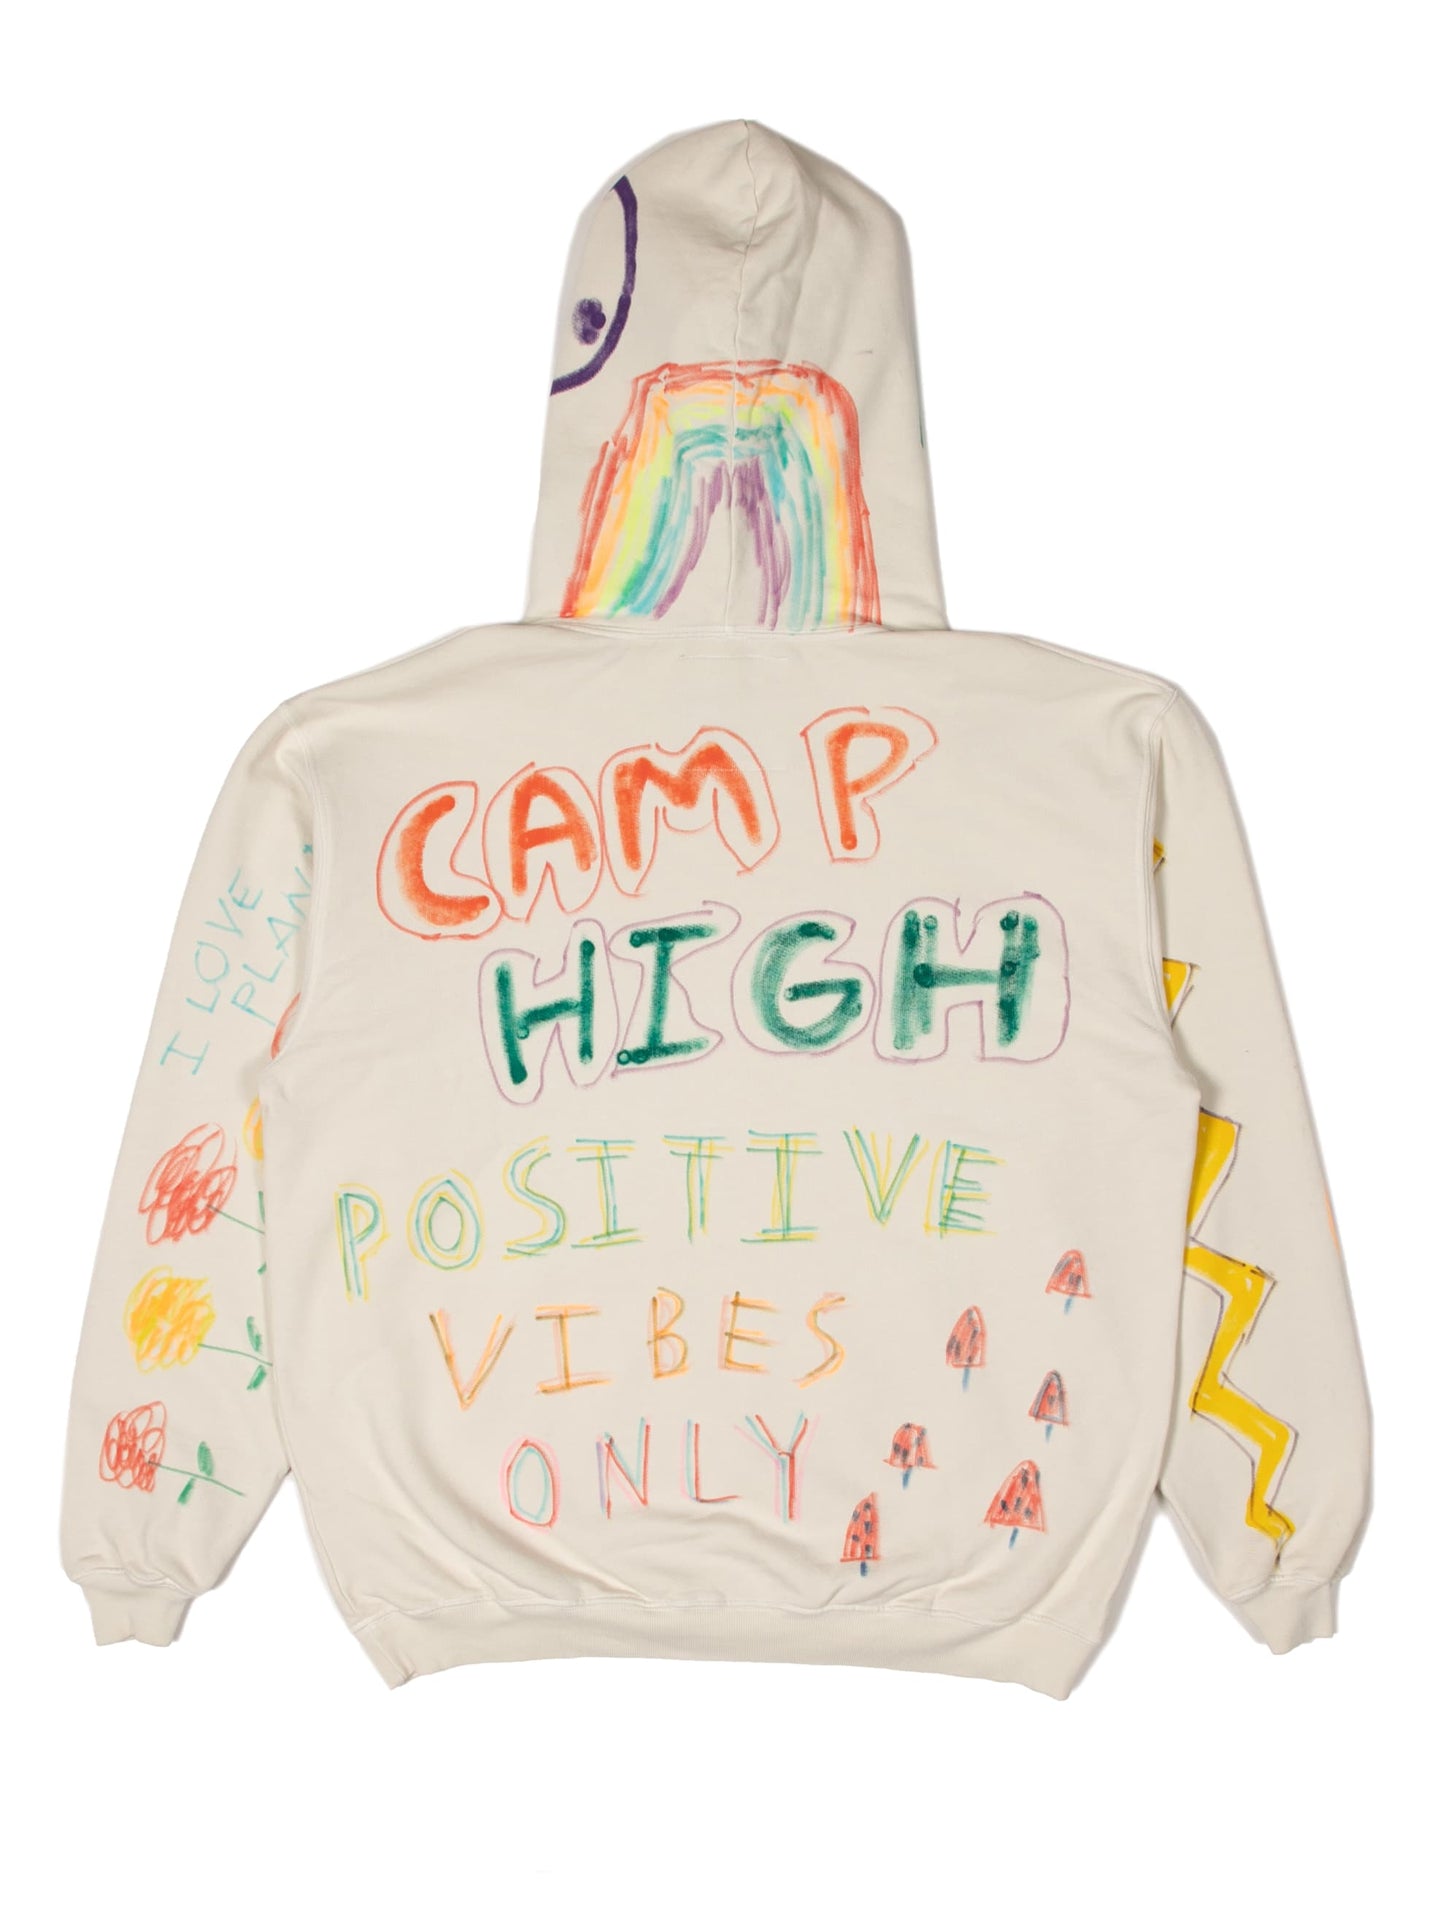 camphigh Camp Customs by Charlie Hoodie